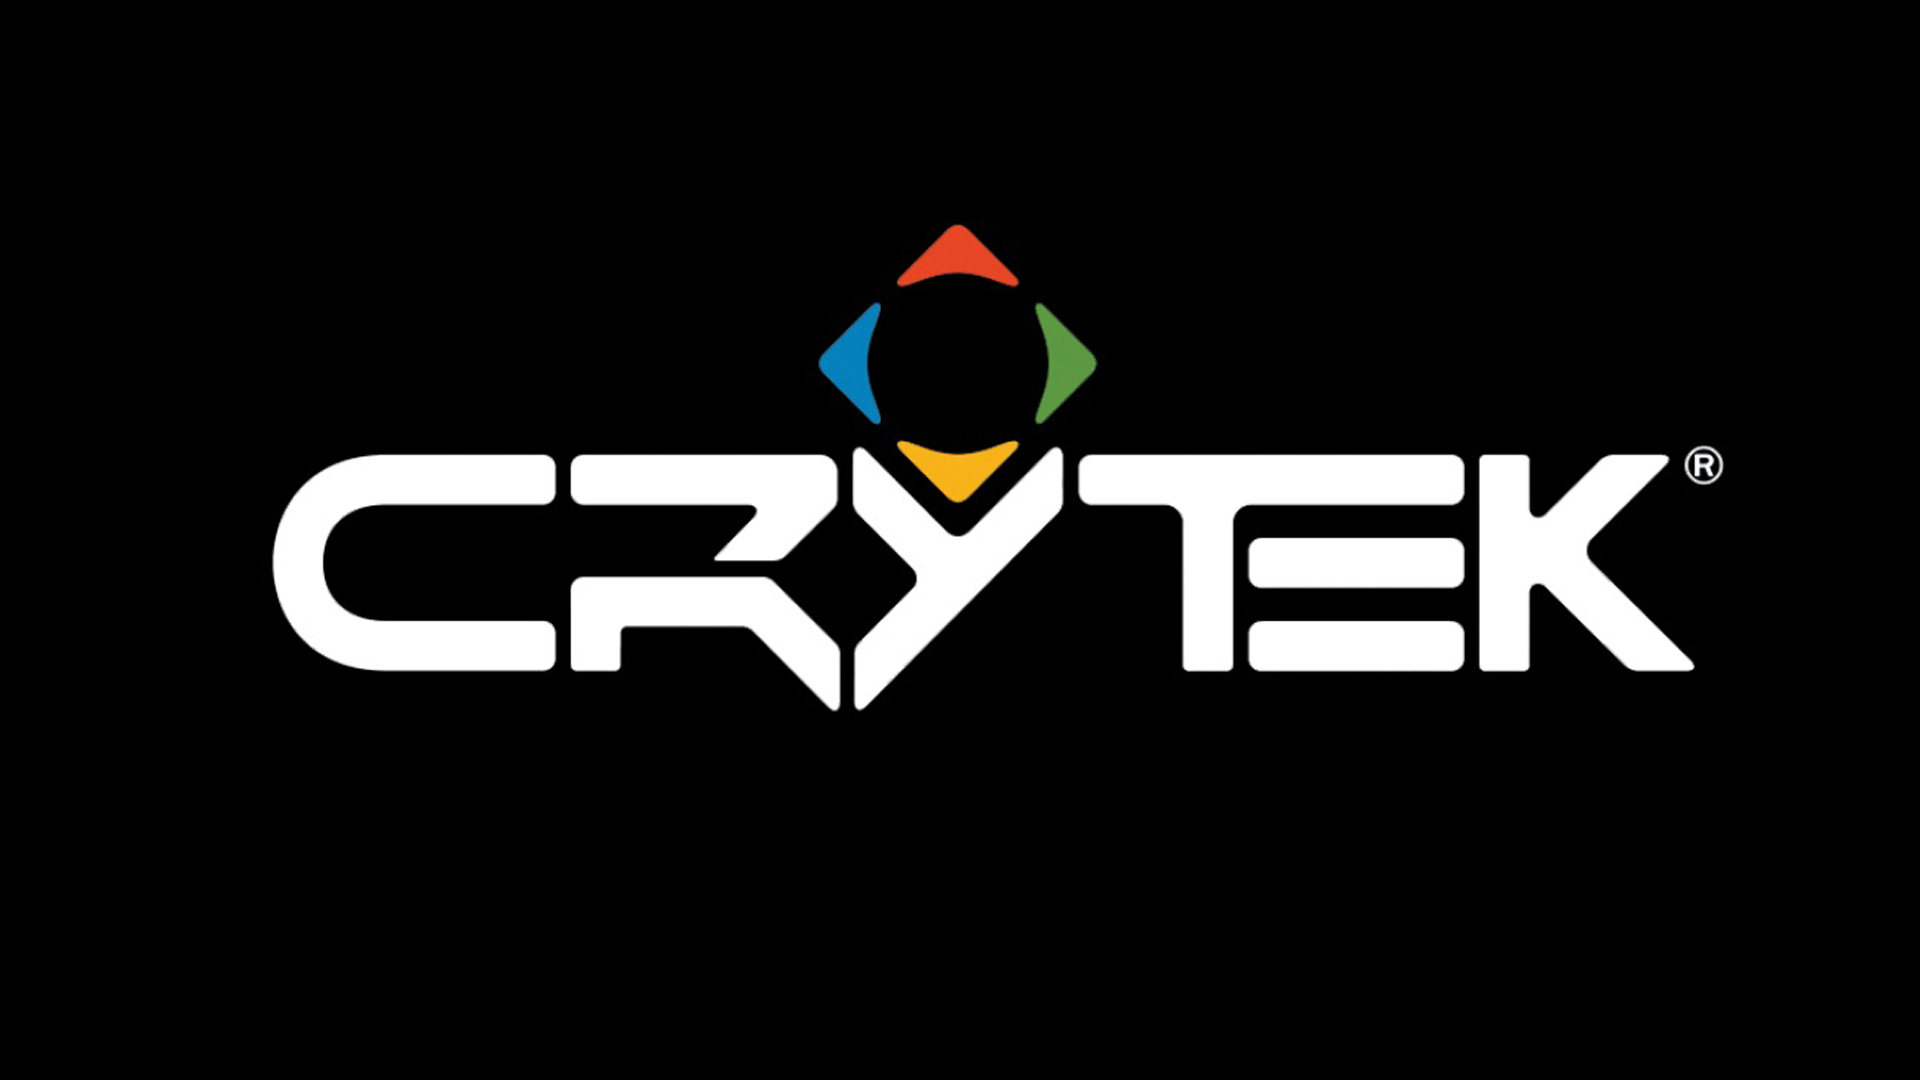 GDC 2015: شرکت Crytek بار دیگر قدرت موتور CRYENGINE را به نمایش گذاشت